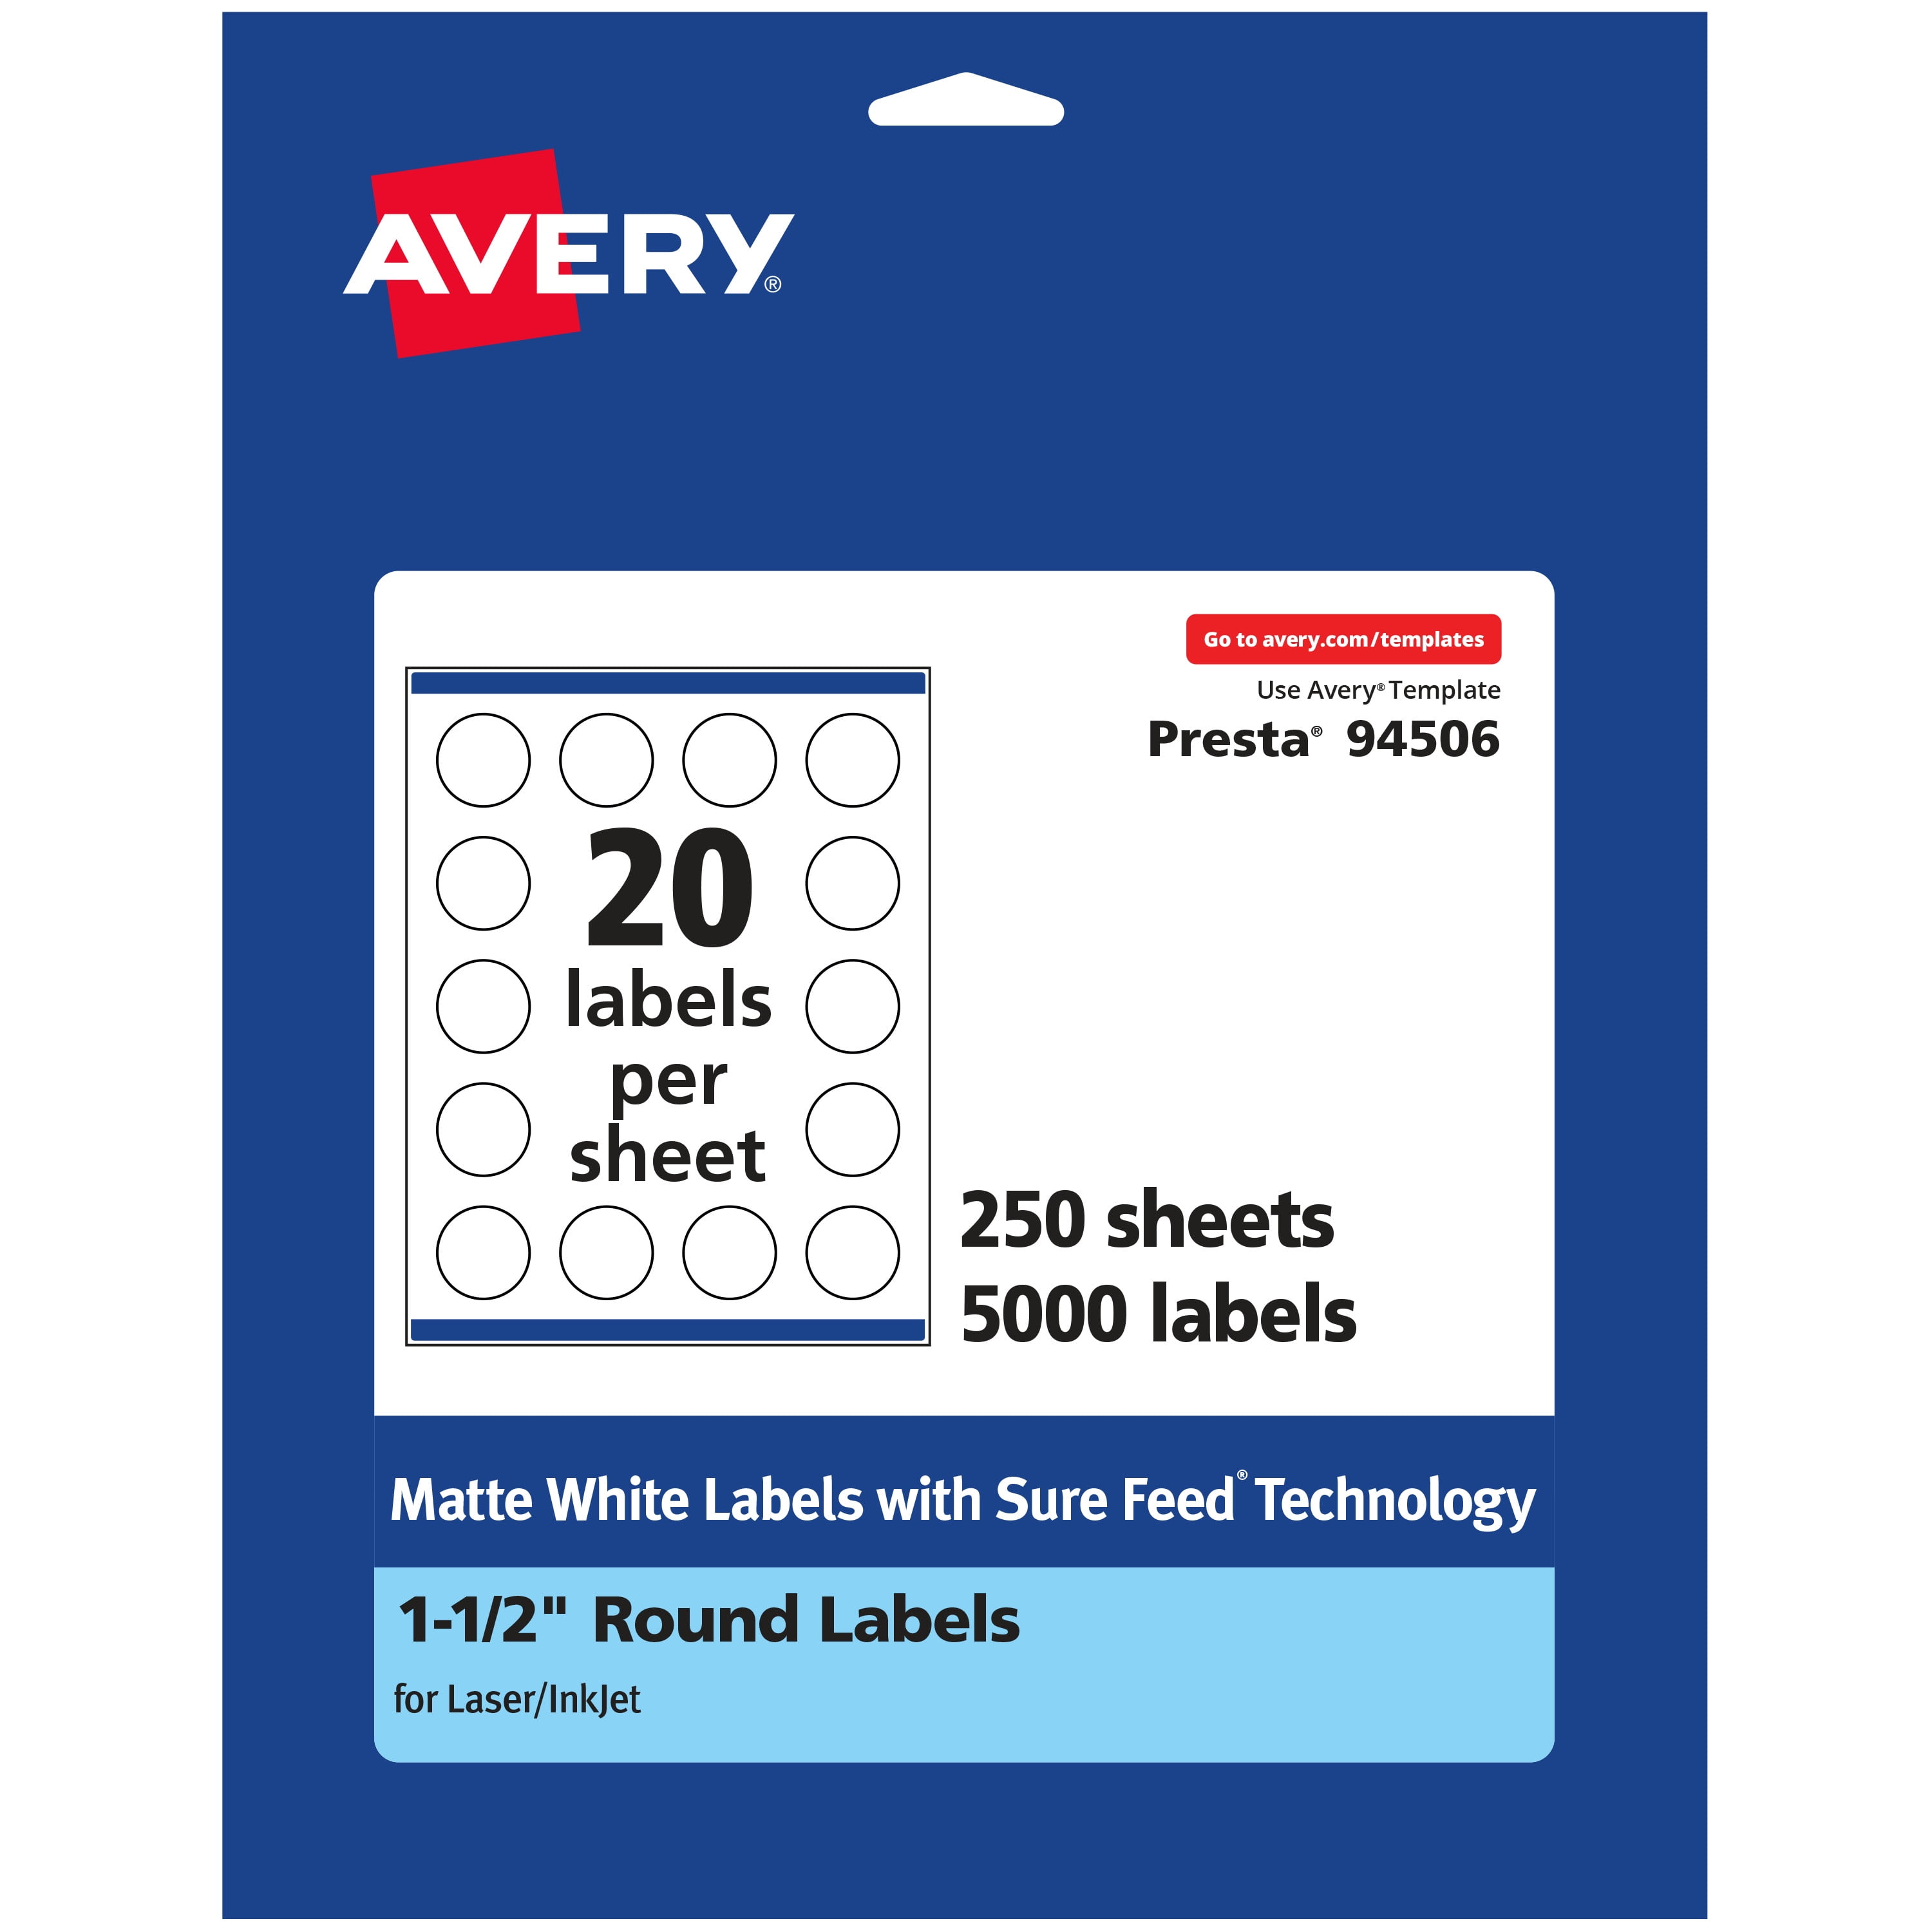 avery-matte-white-round-labels-1-5-diameter-5-000-labels-walmart